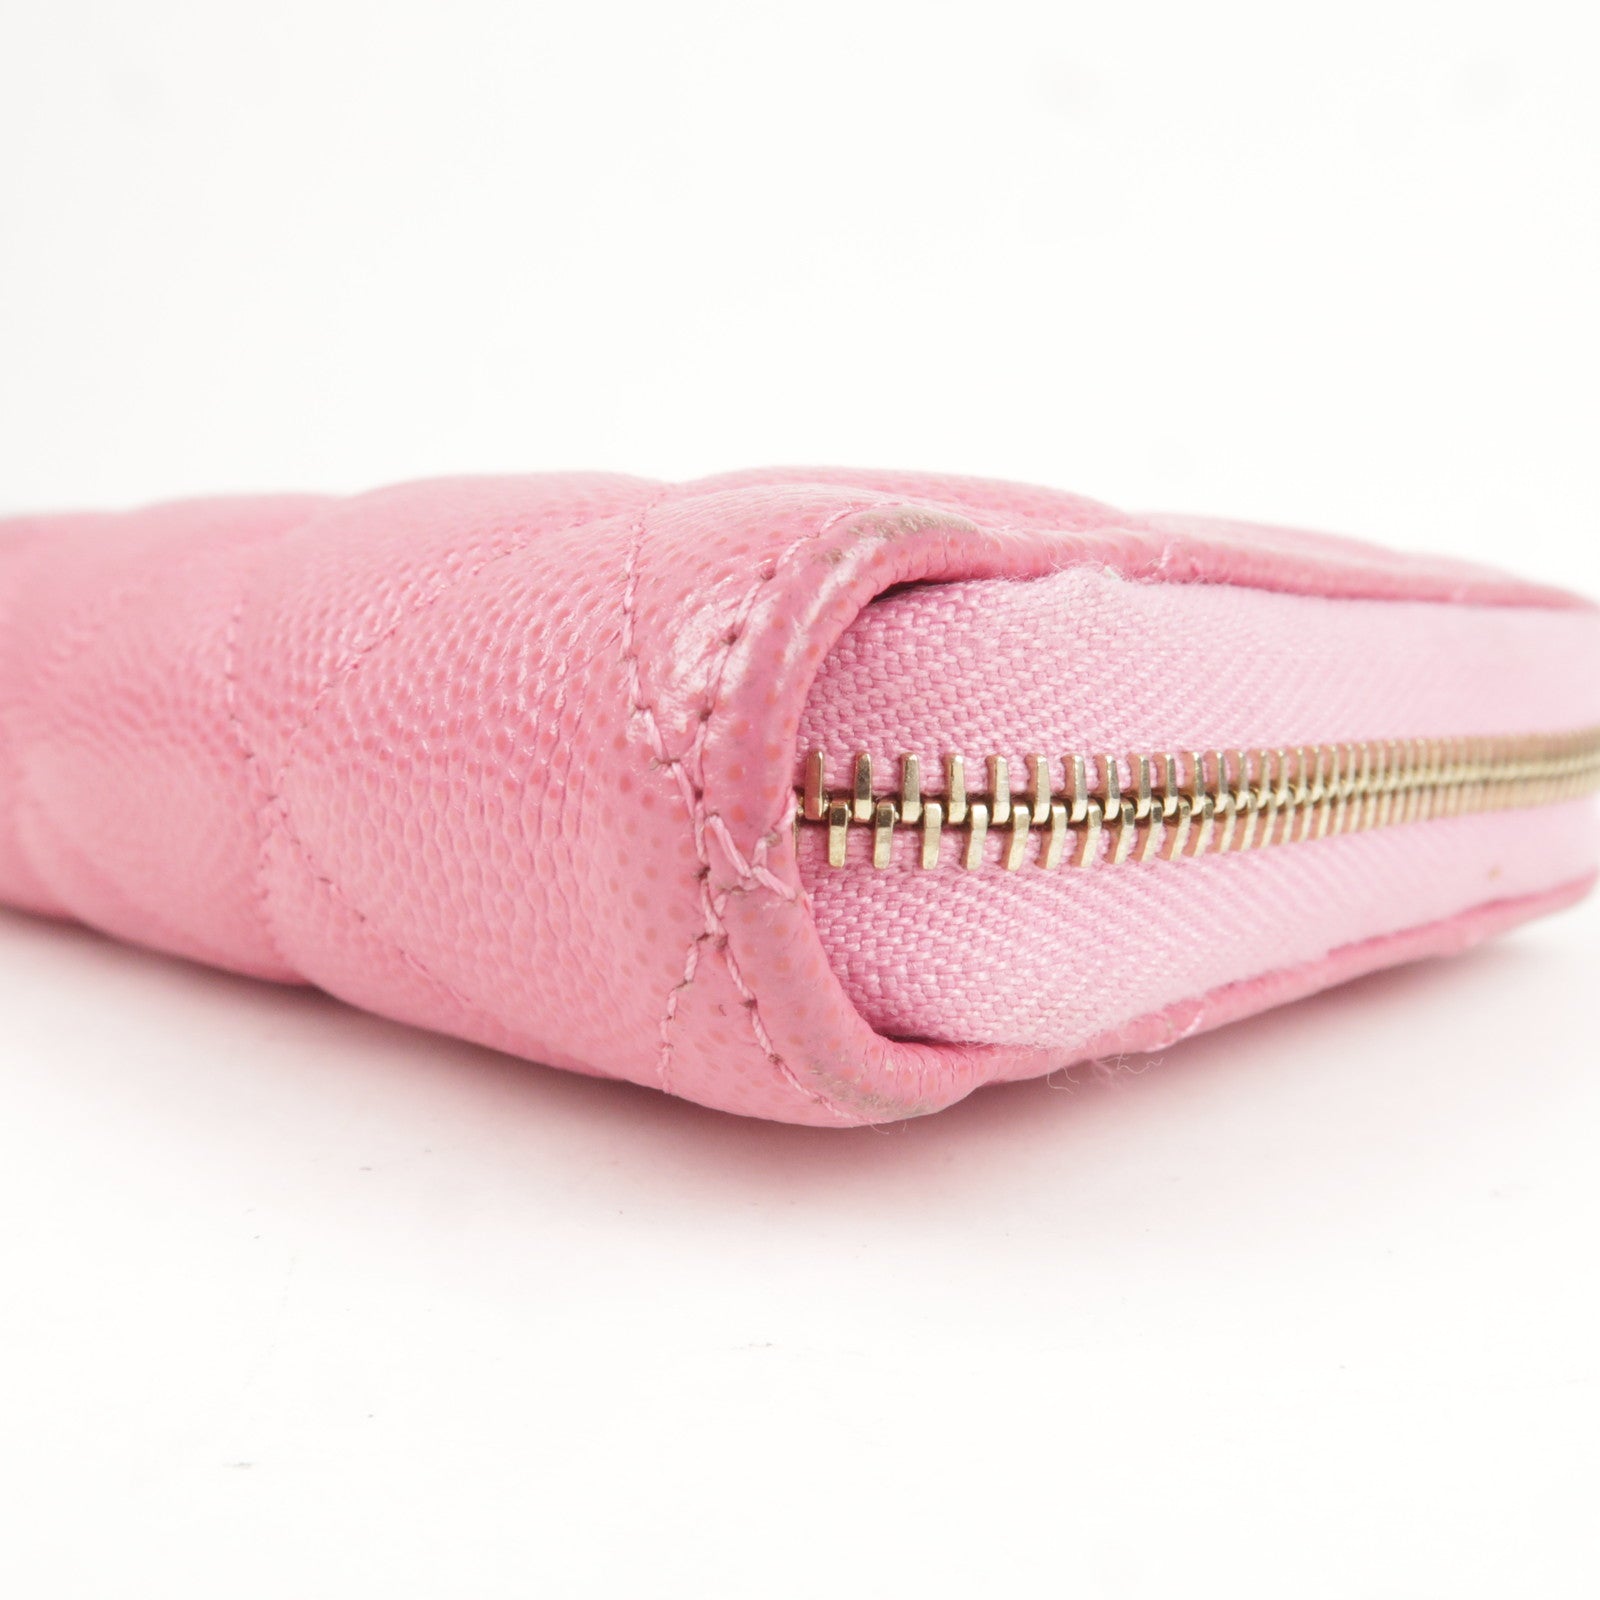 chanel pink caviar wallet